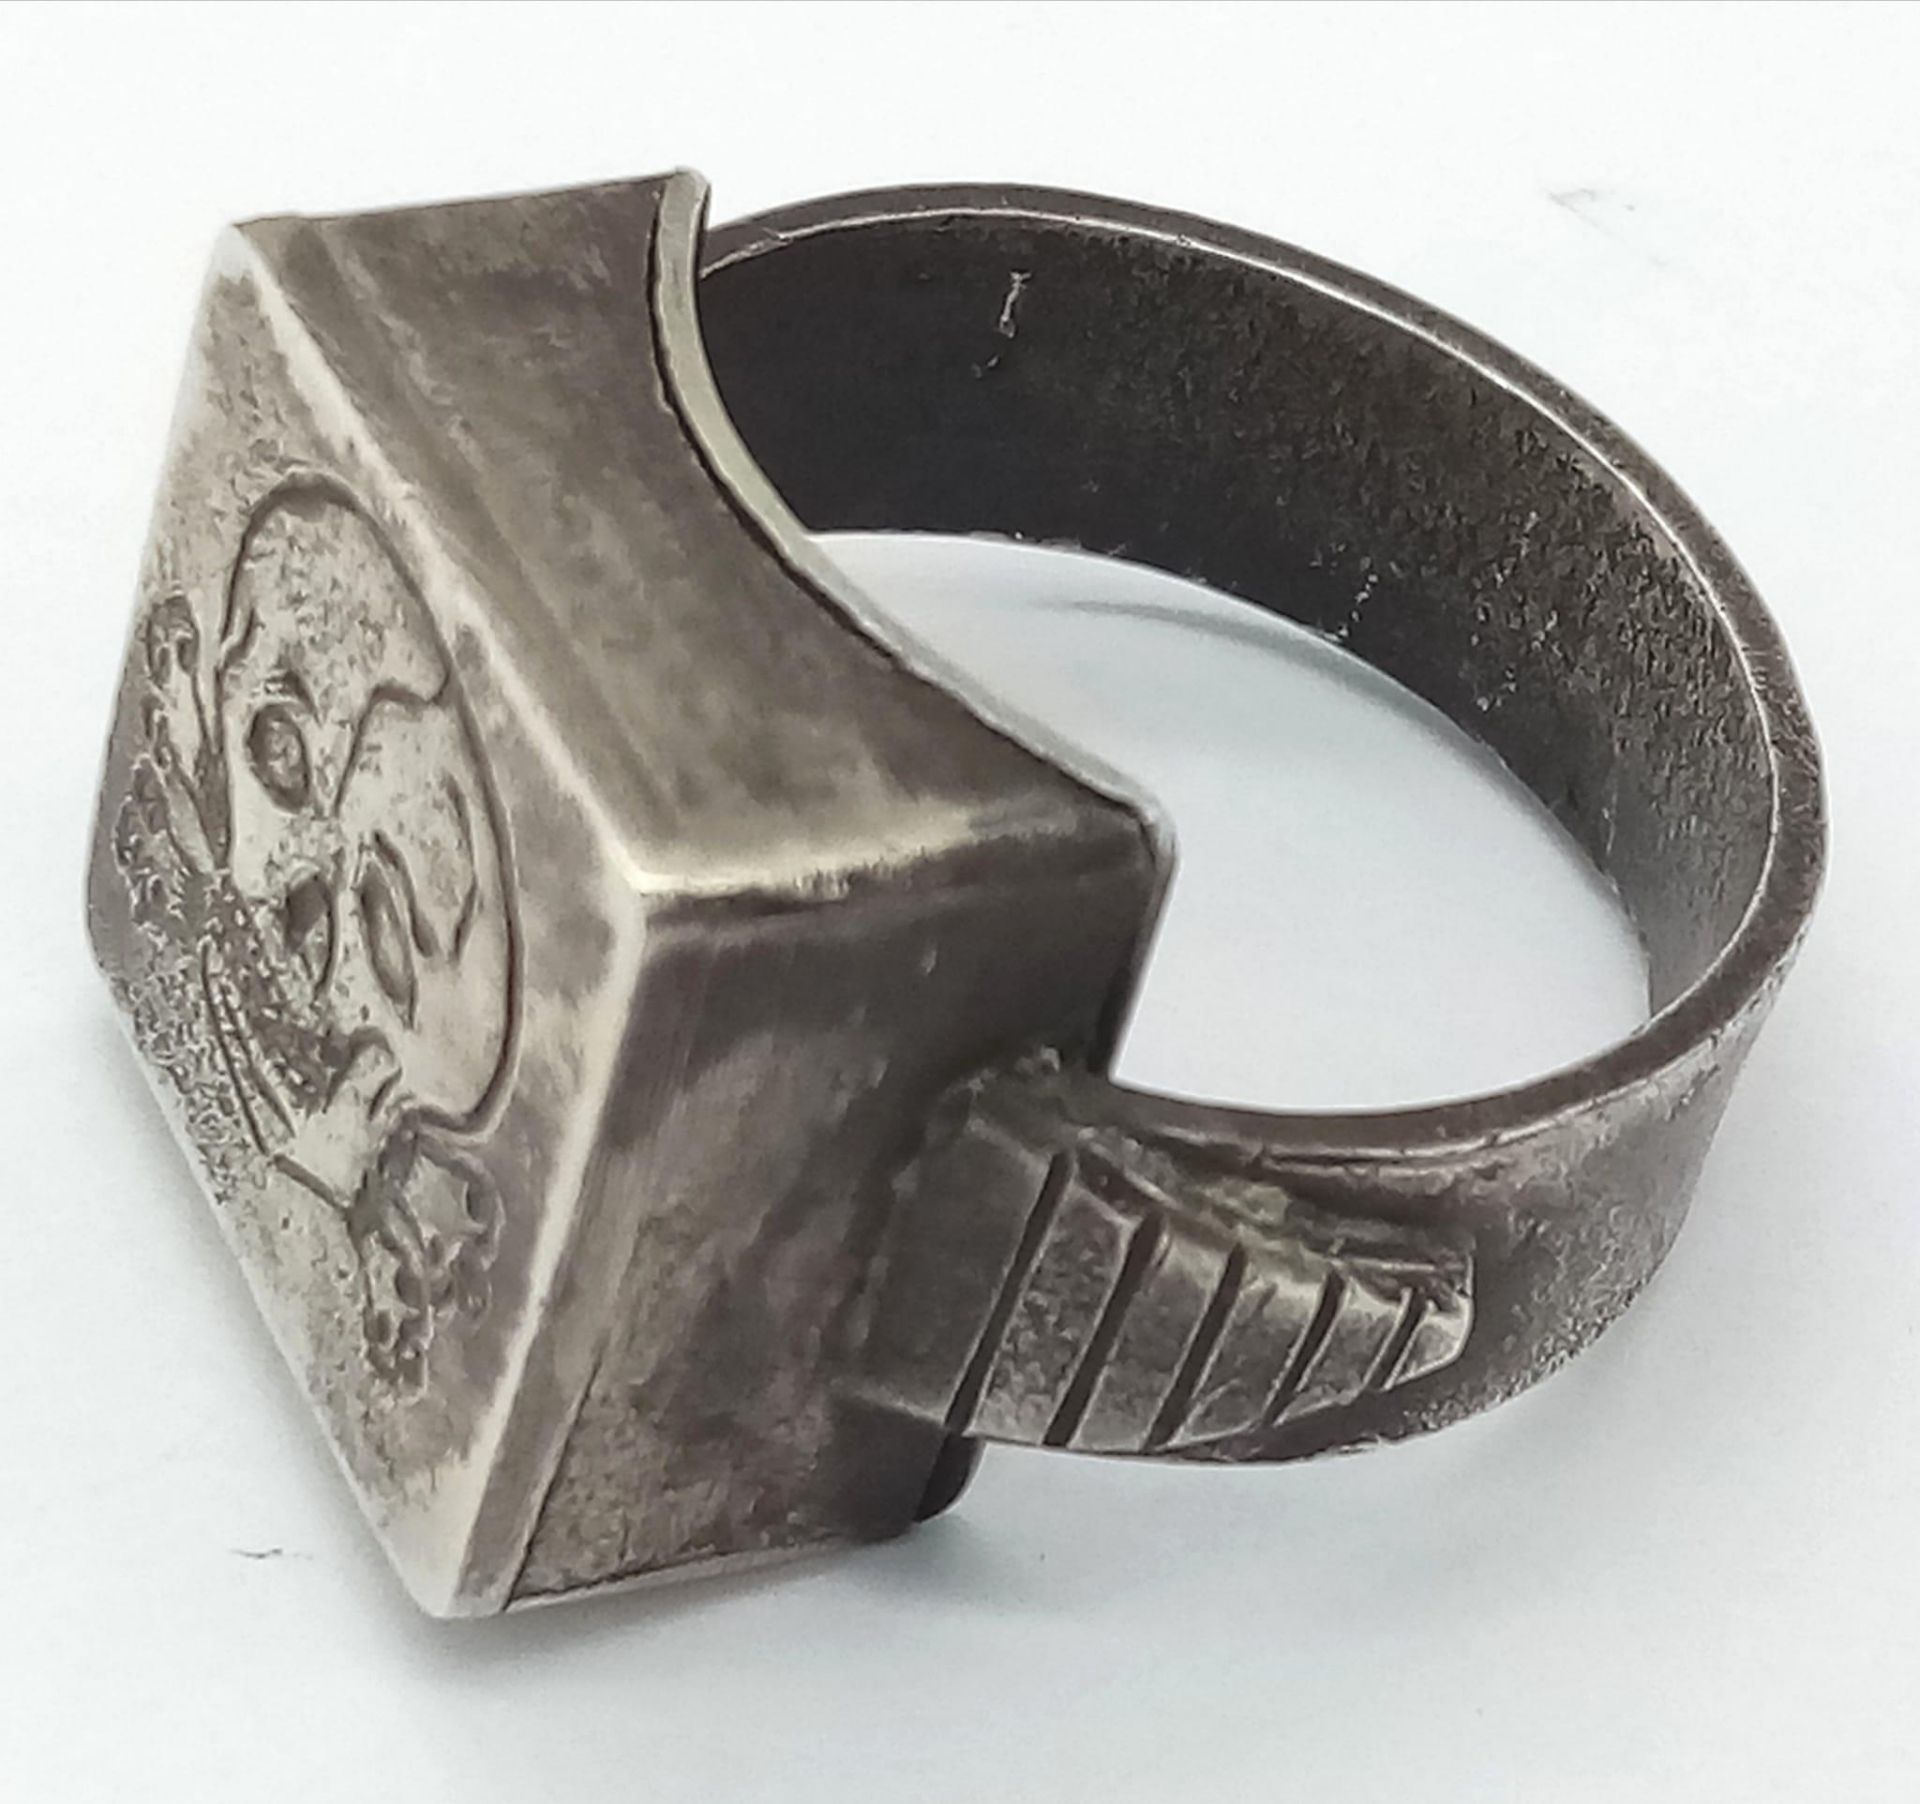 3rd Reich Waffen SS Totenkopf (Death’s Head) Division Bespoke Made Silver Ring with hidden - Bild 2 aus 4